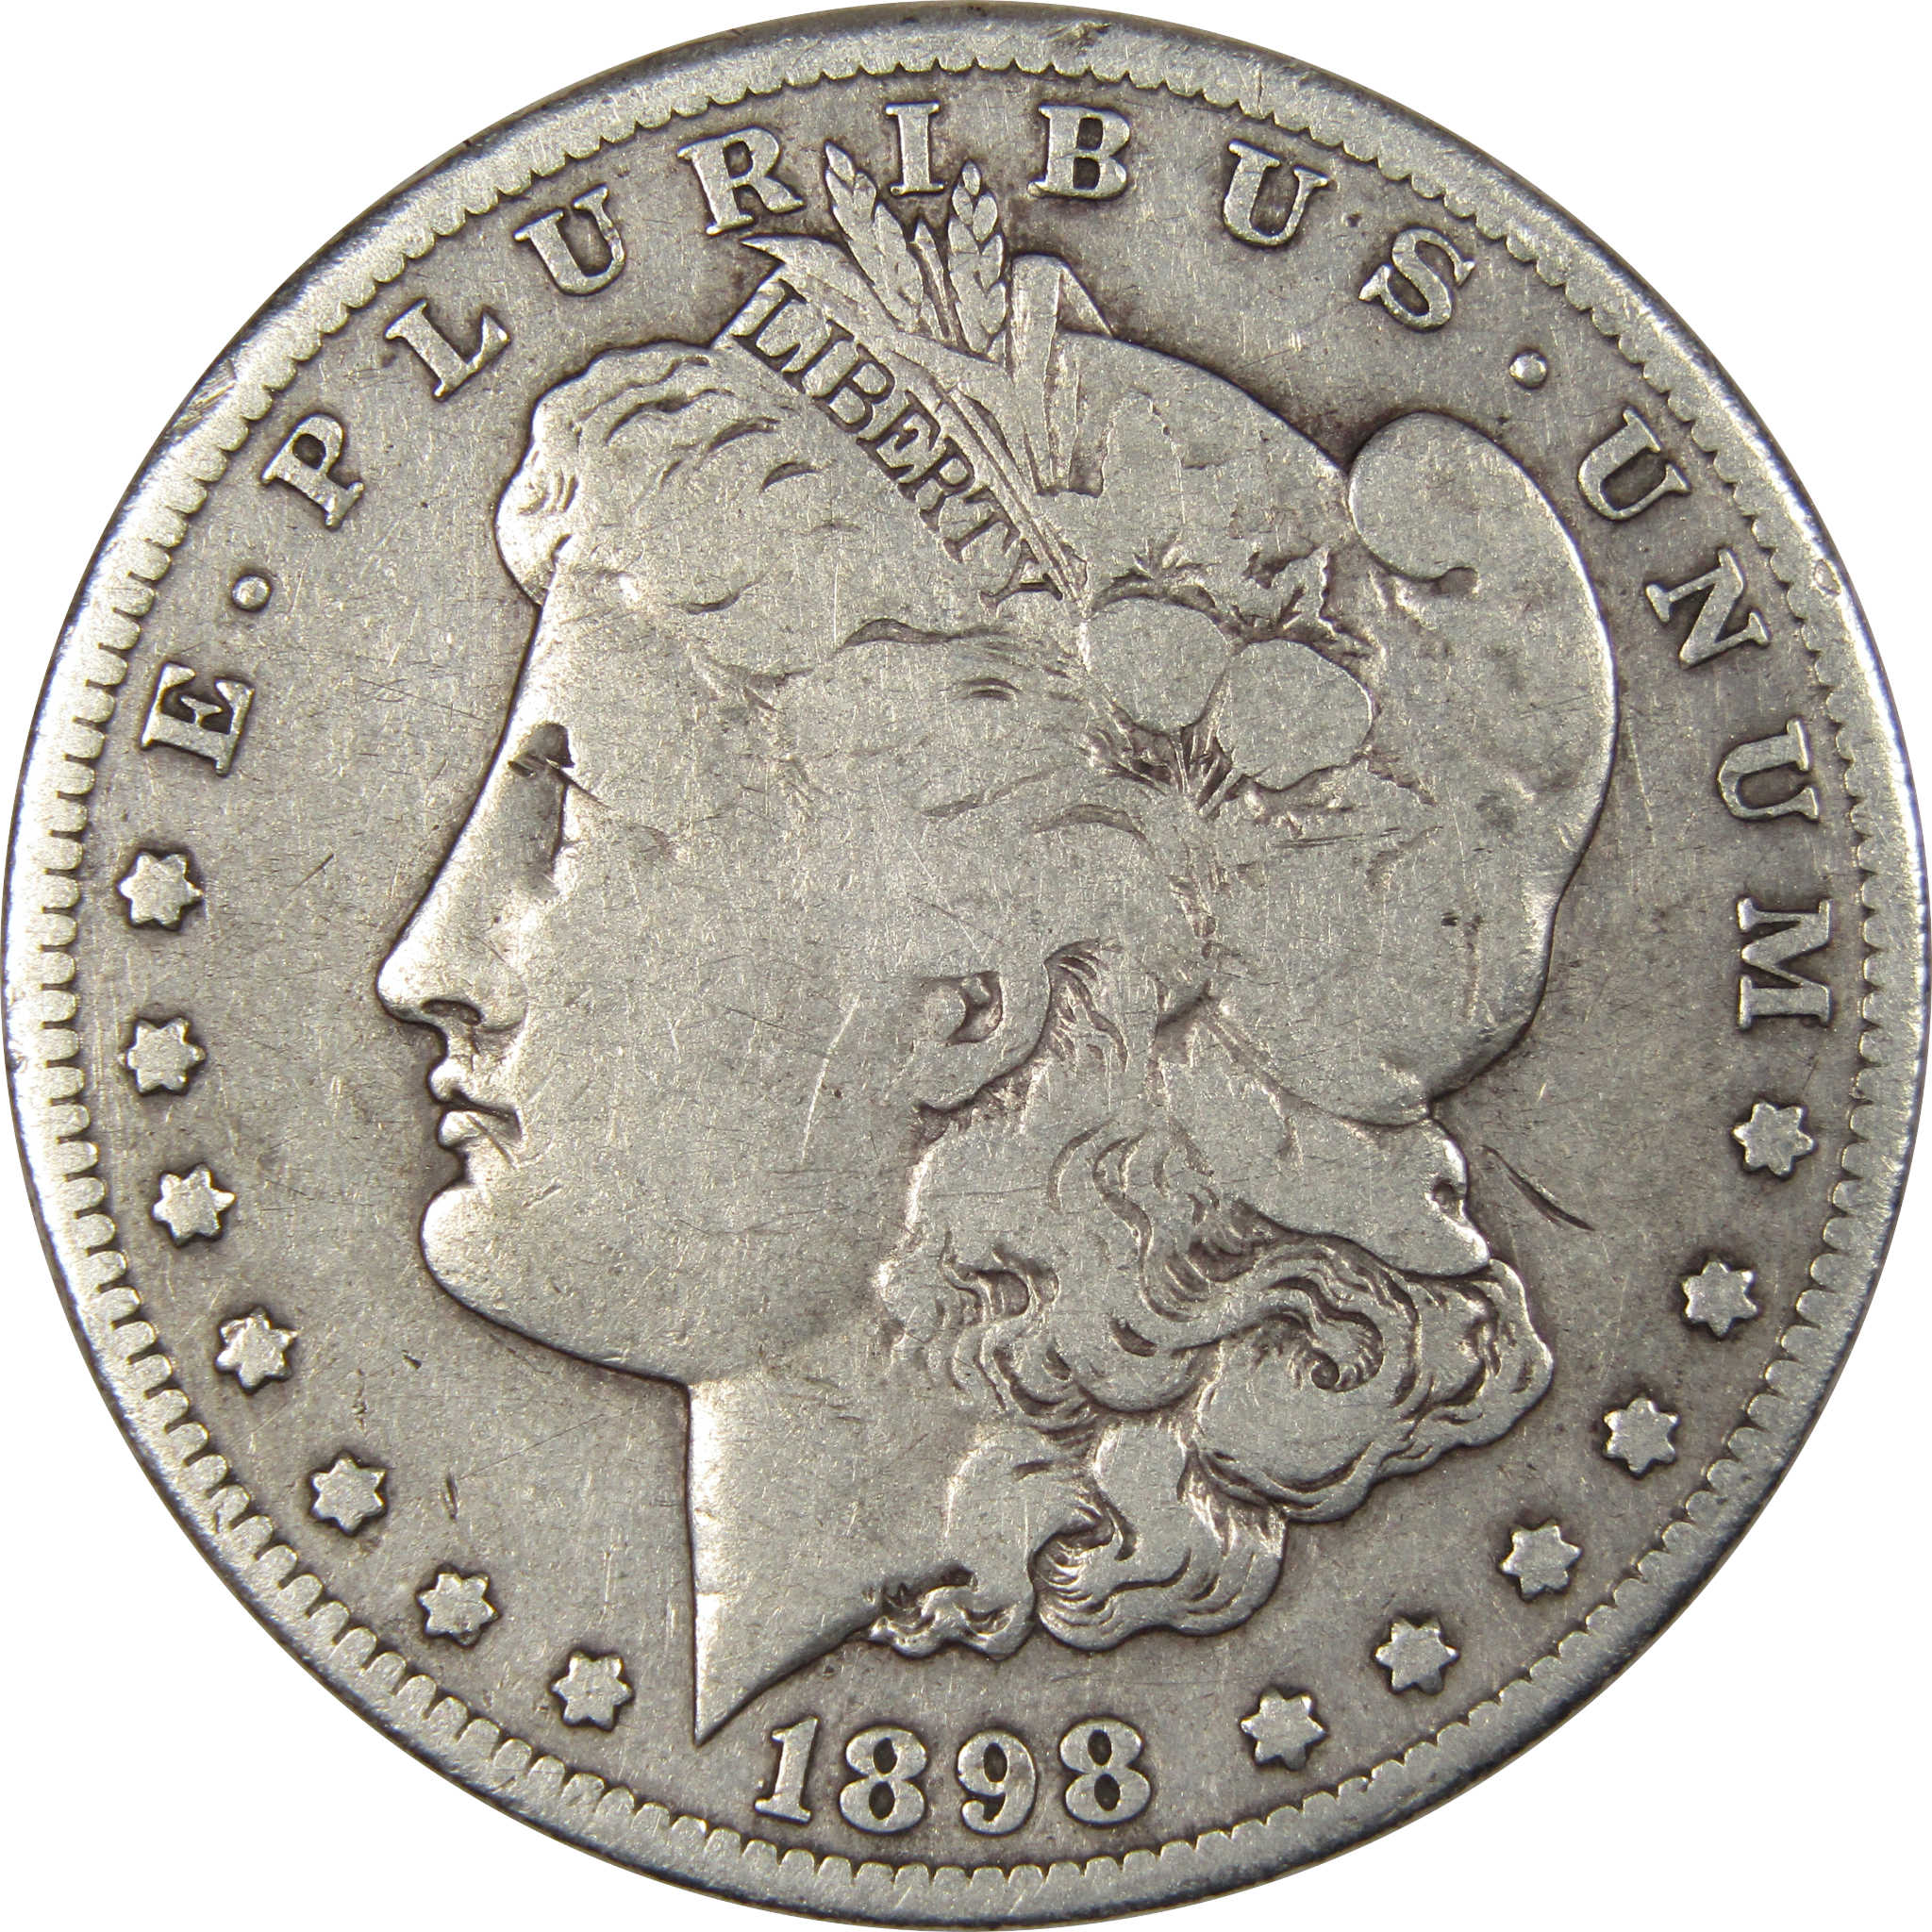 1898 S Morgan Dollar VG Very Good 90% Silver US Coin SKU:IPC8316 - Morgan coin - Morgan silver dollar - Morgan silver dollar for sale - Profile Coins &amp; Collectibles